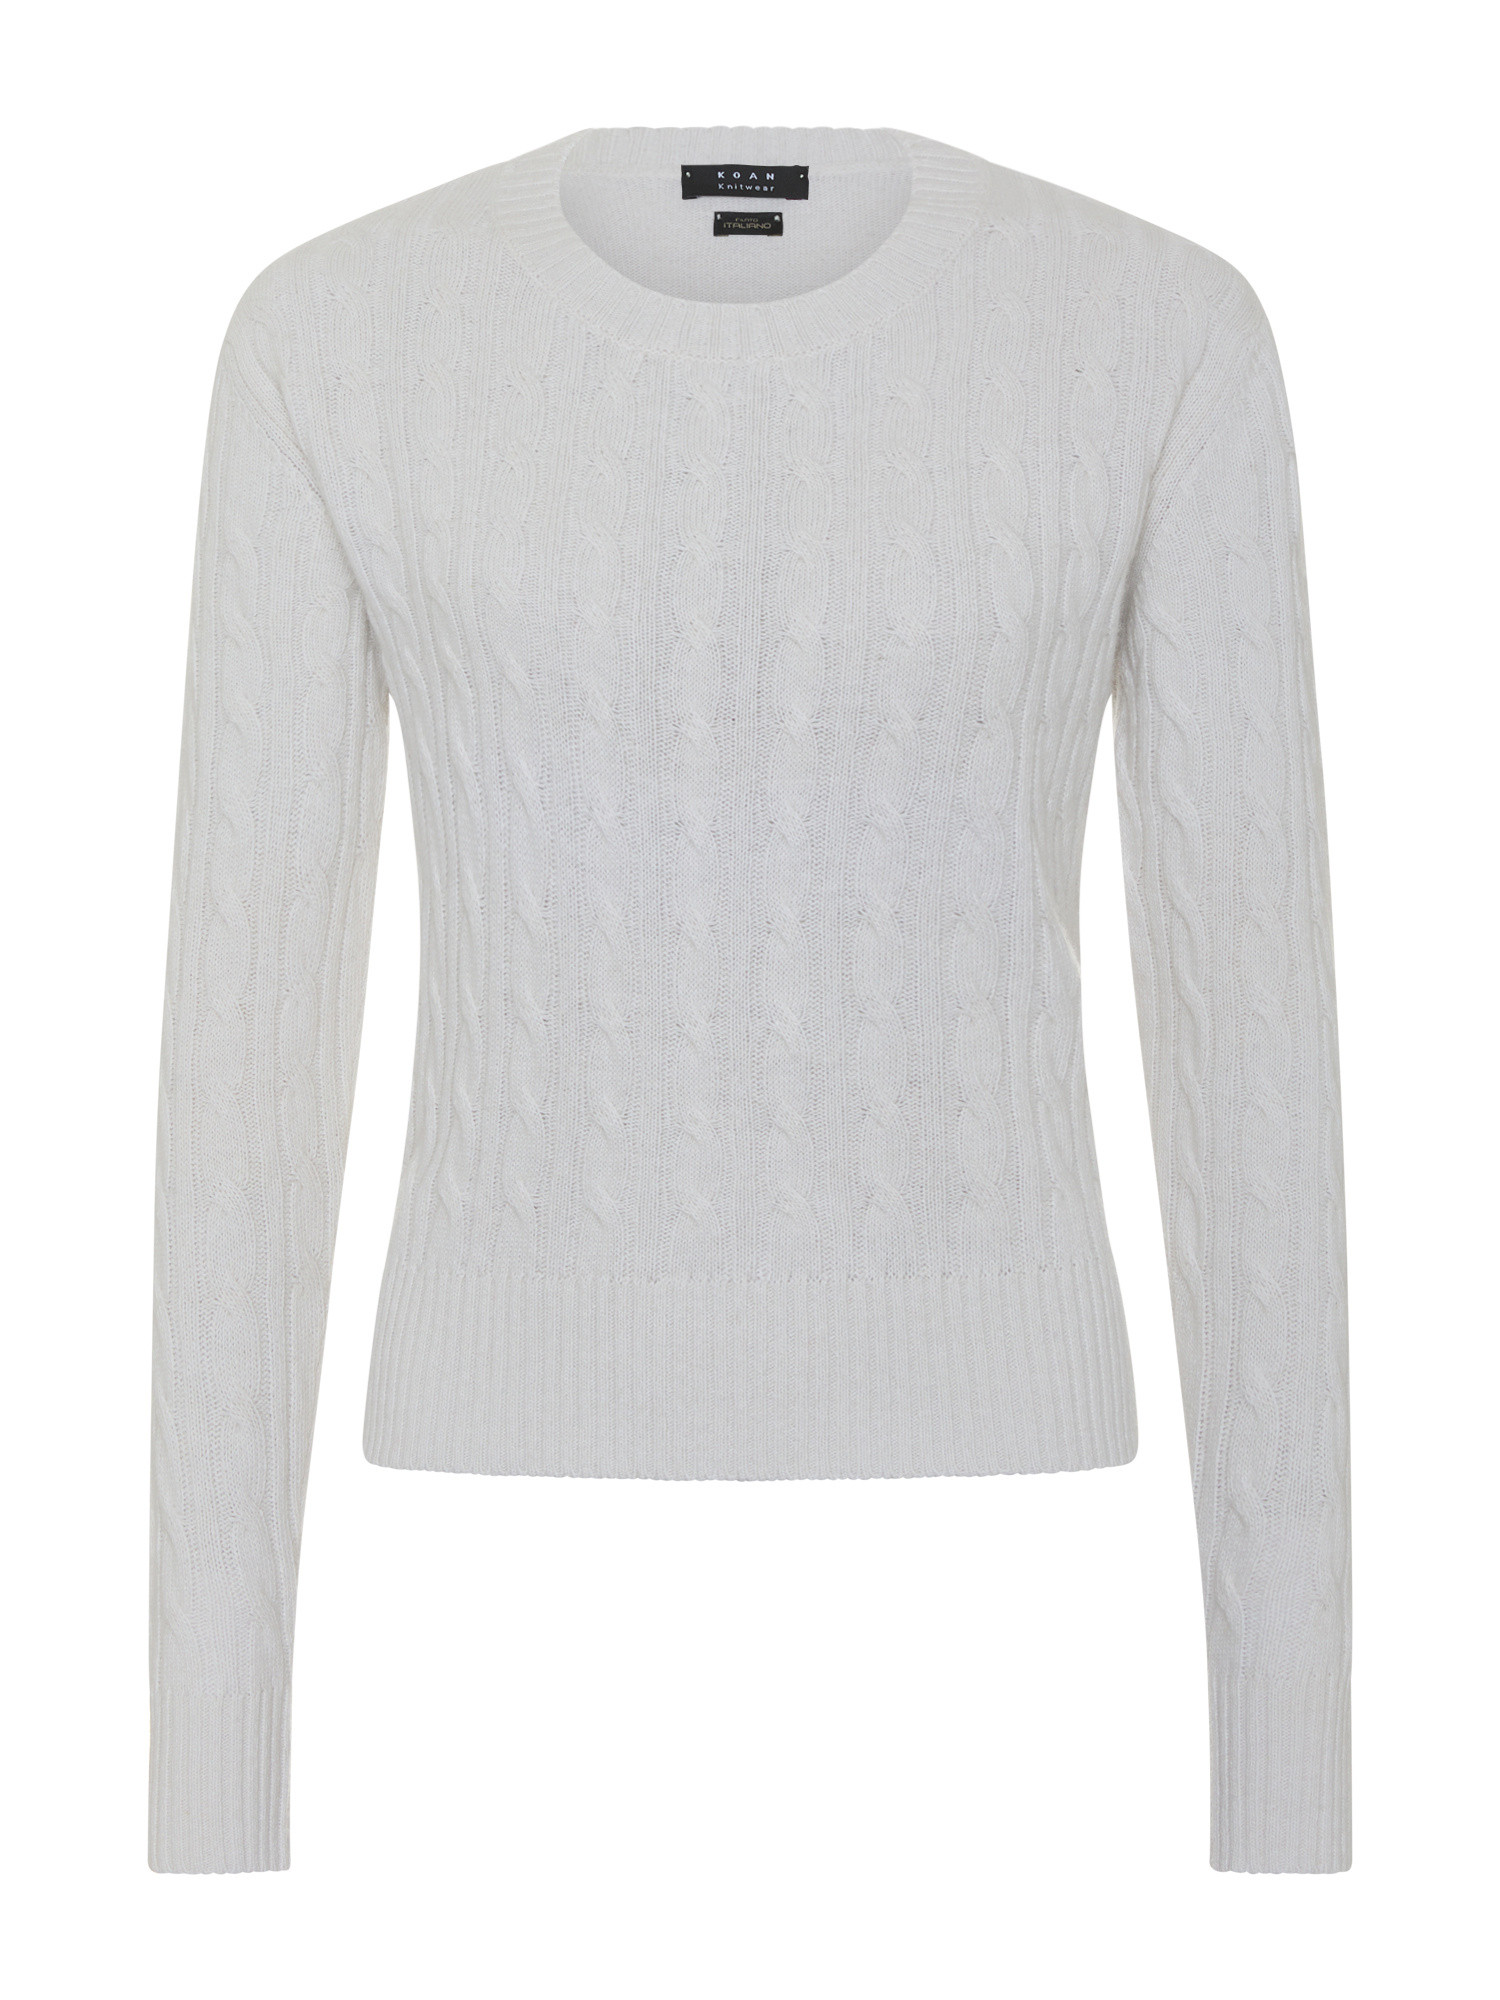 Koan - Crew-neck sweater with braid motif, White Cream, large image number 0